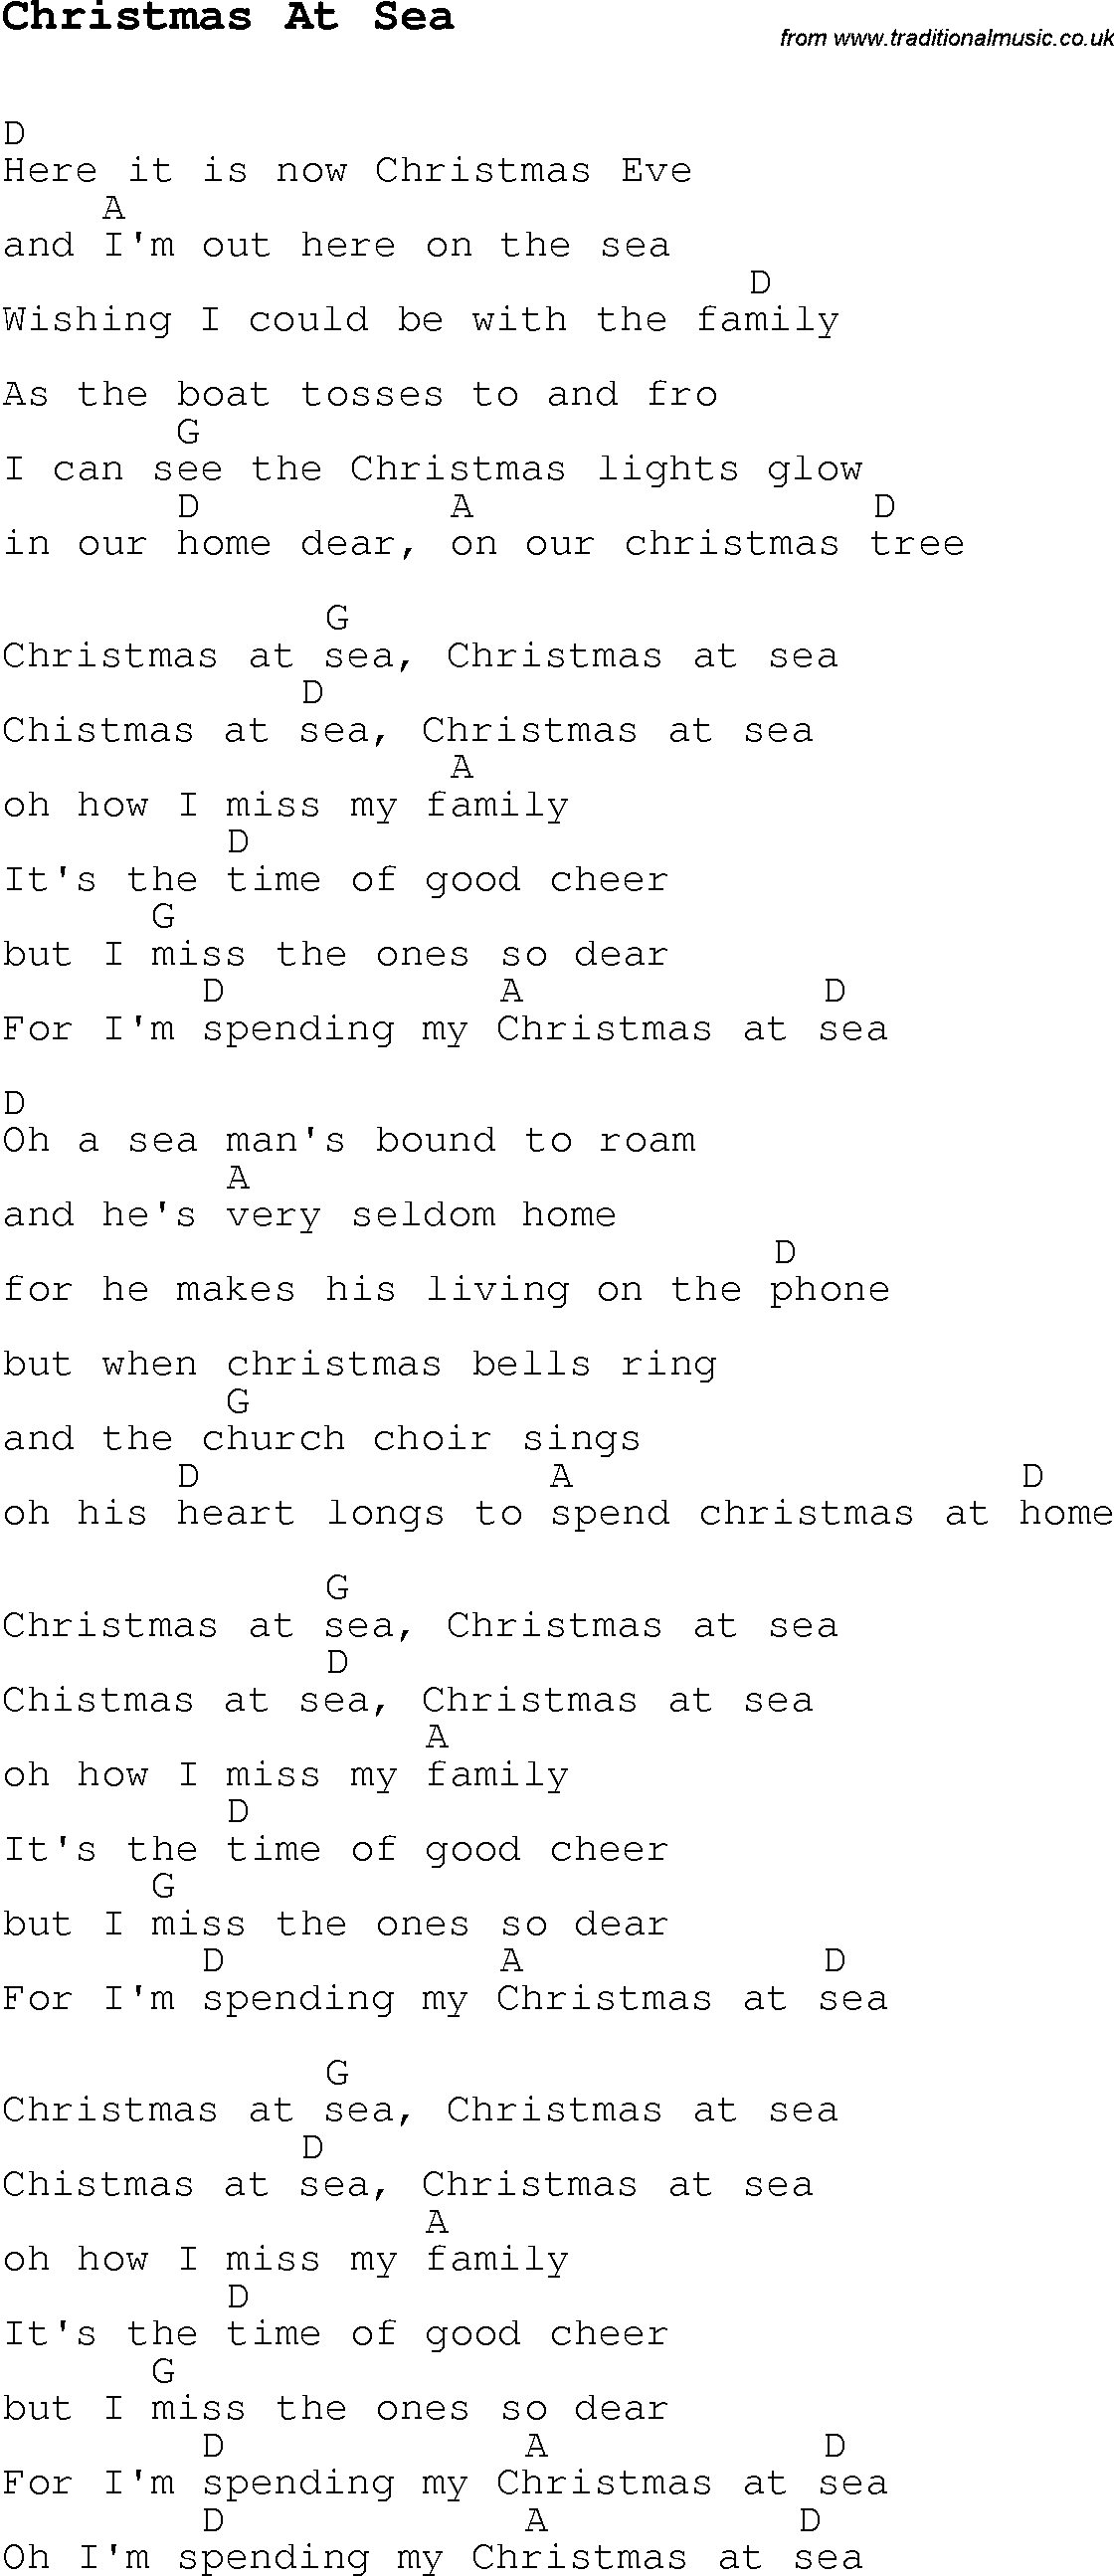 Christmas Songs and Carols, lyrics with chords for guitar banjo for Christmas At Sea